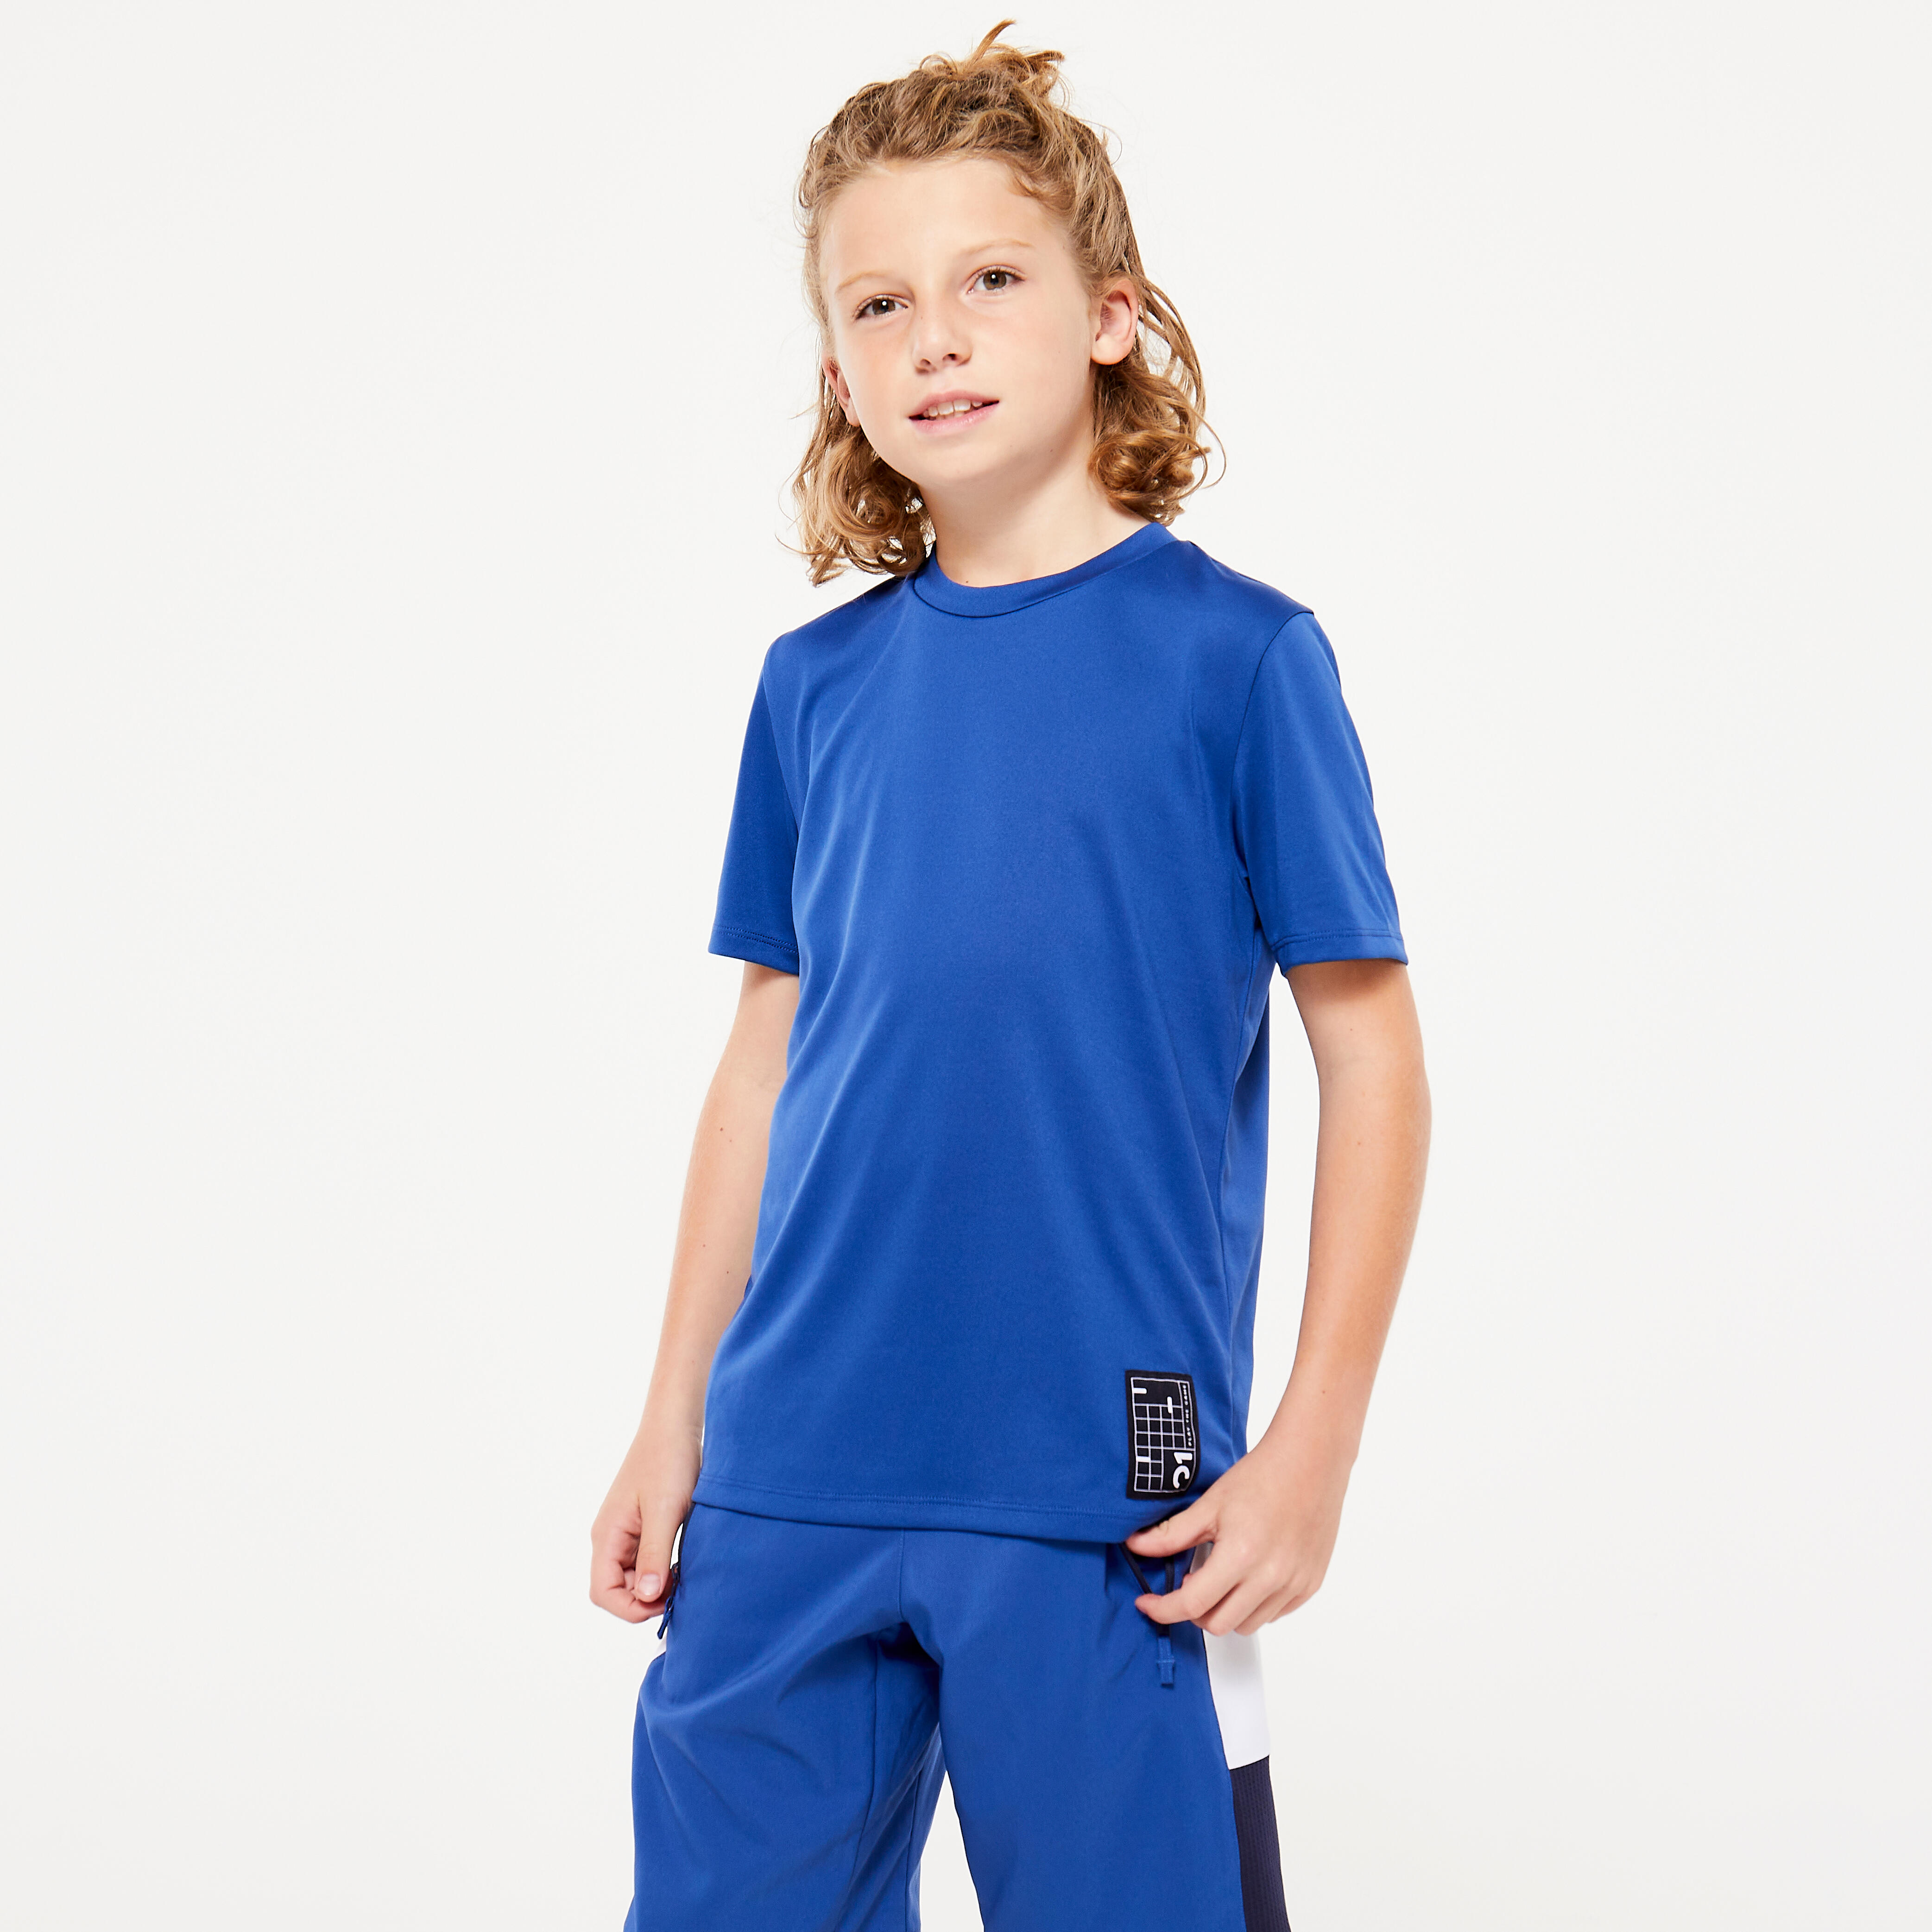 Decathlon | T-shirt bambino ginnastica regular fit traspirante blu |  Decathlon